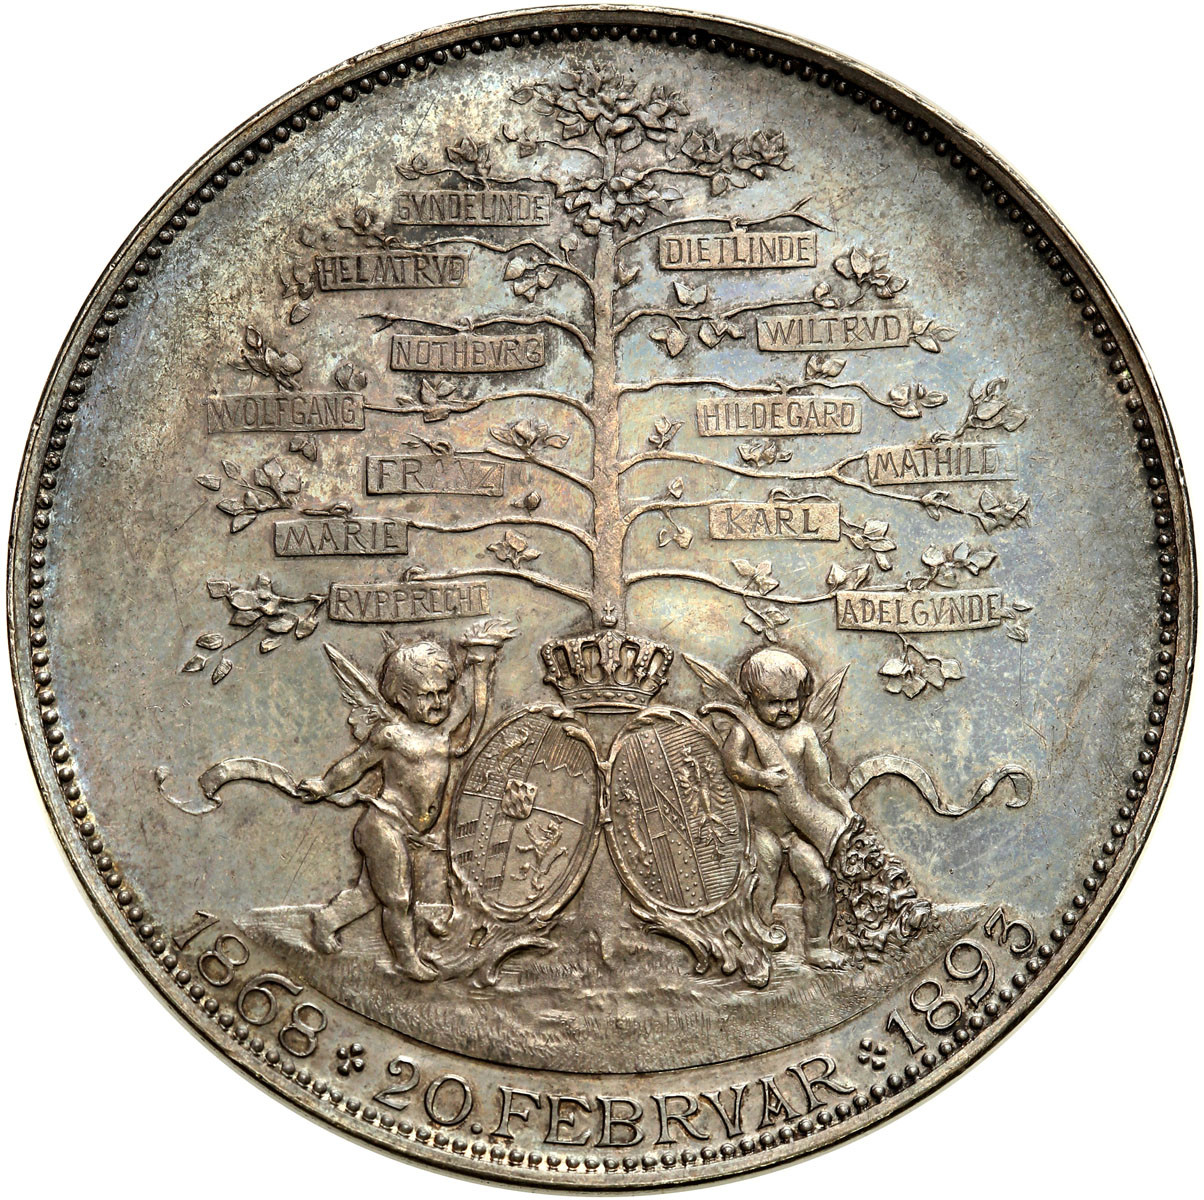 Niemcy. Bawaria Luitpold, Prinzregent 1886-1912, 1893, Medal srebro